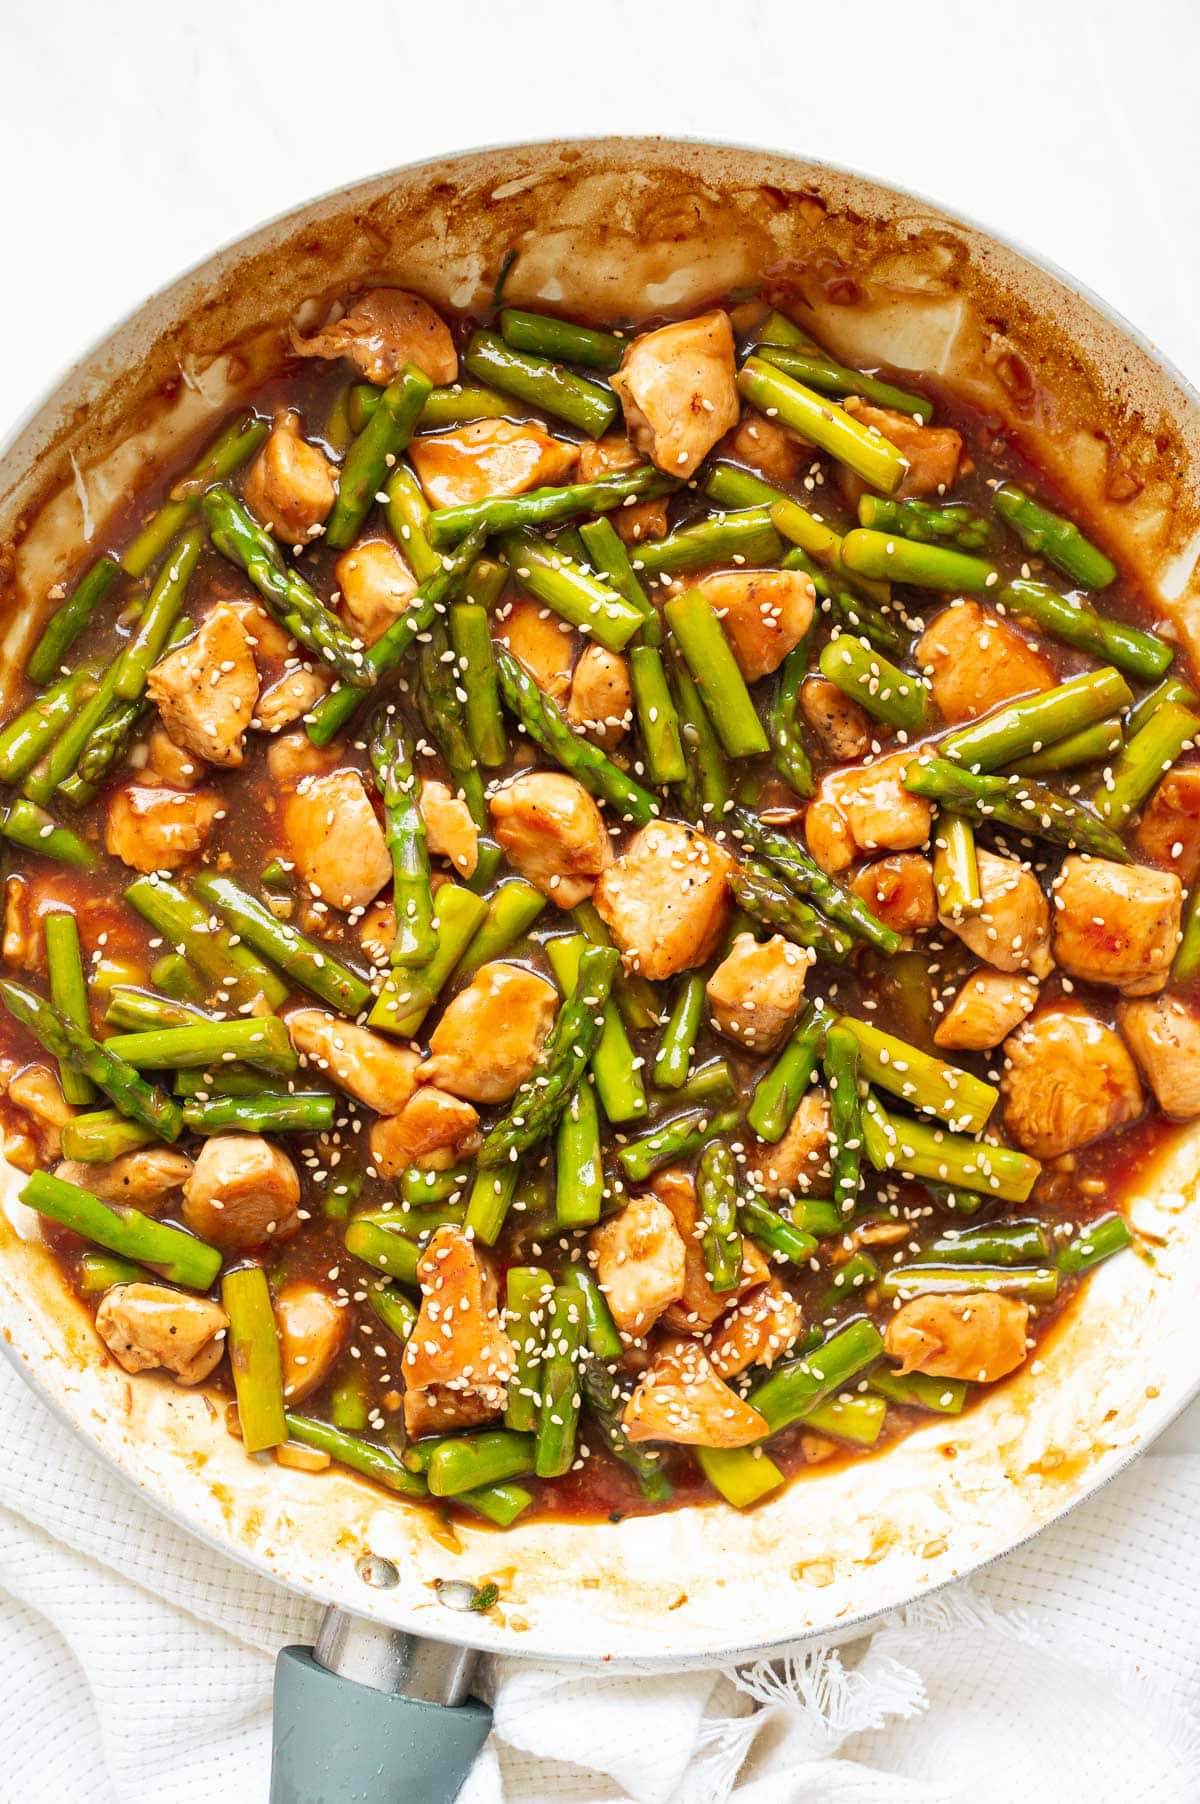 Chicken asparagus stir fry garnished with sesame seeds in a skillet.